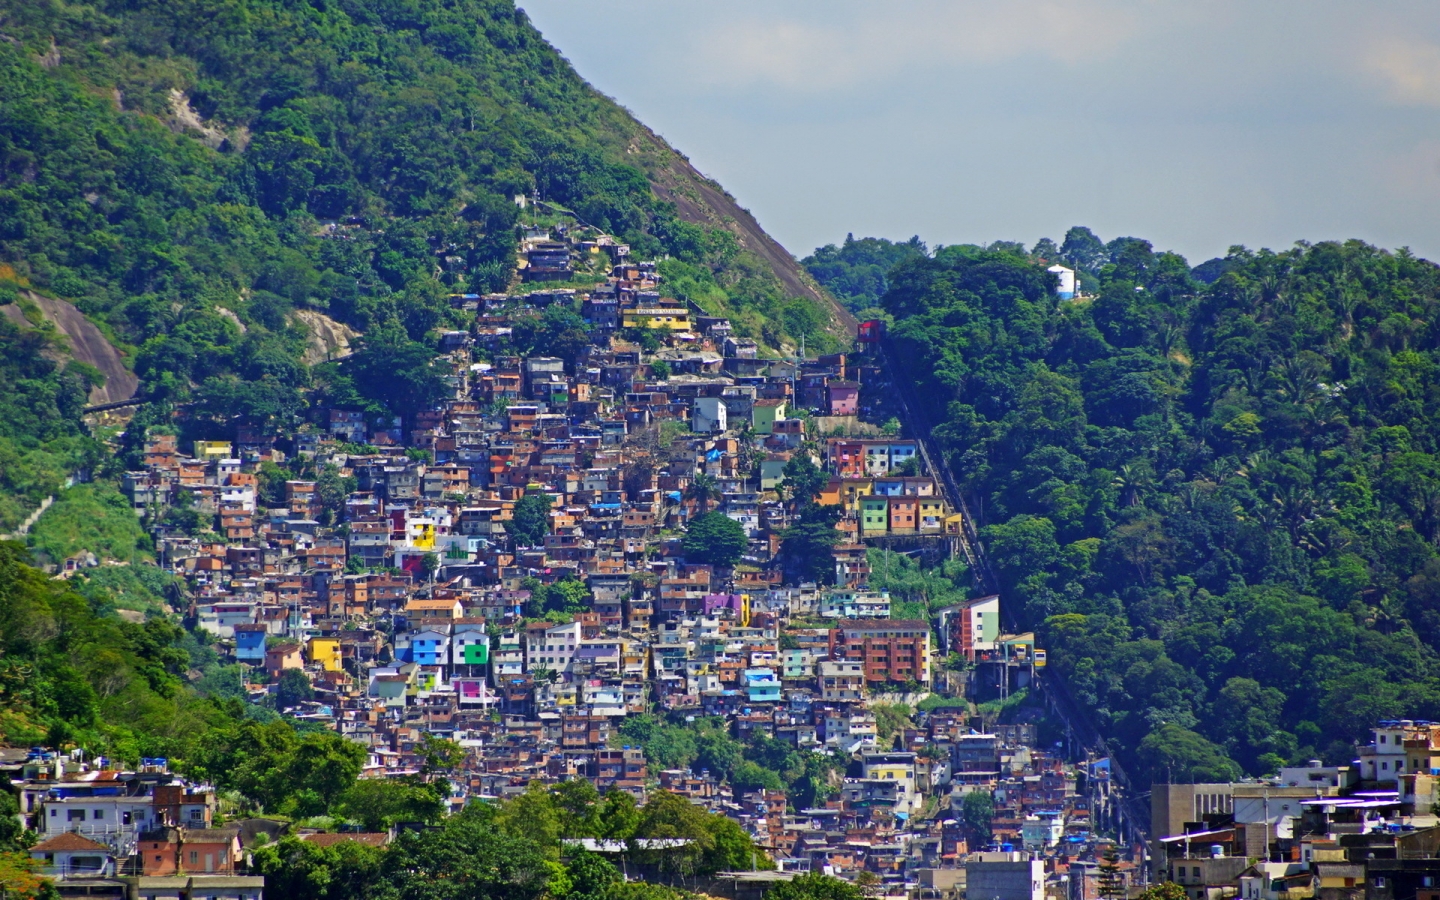 Rio de Janeiro Mountains Houses for 1440 x 900 widescreen resolution